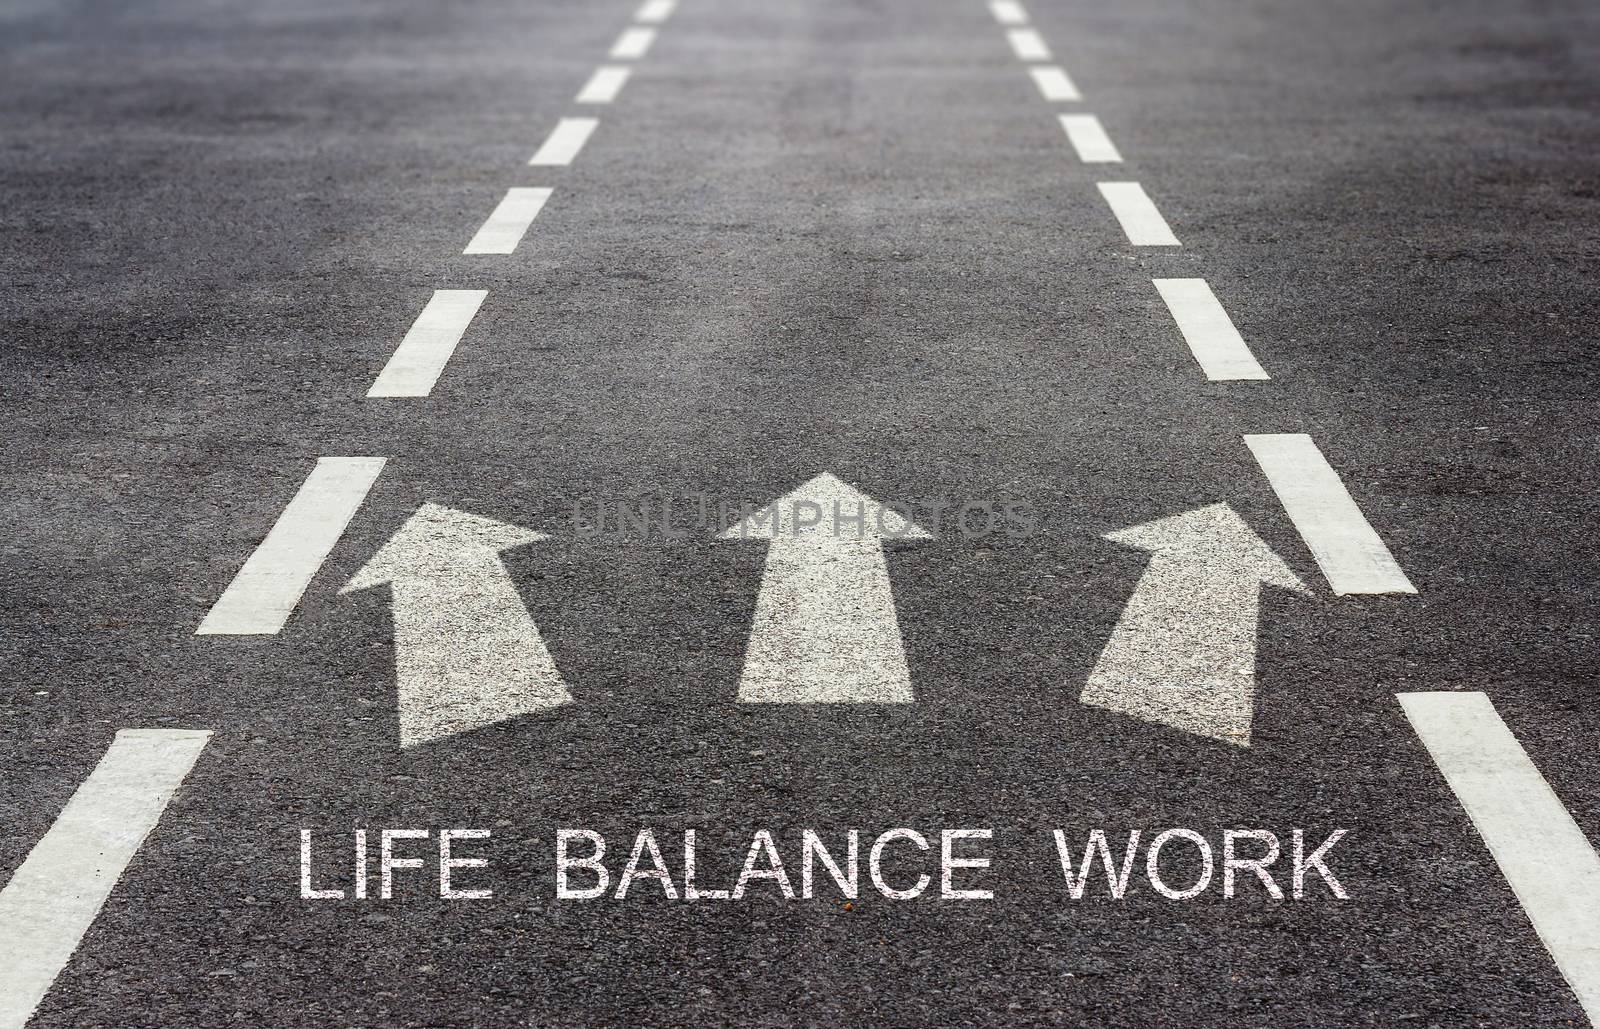 Work Life Balance by Fnatic12